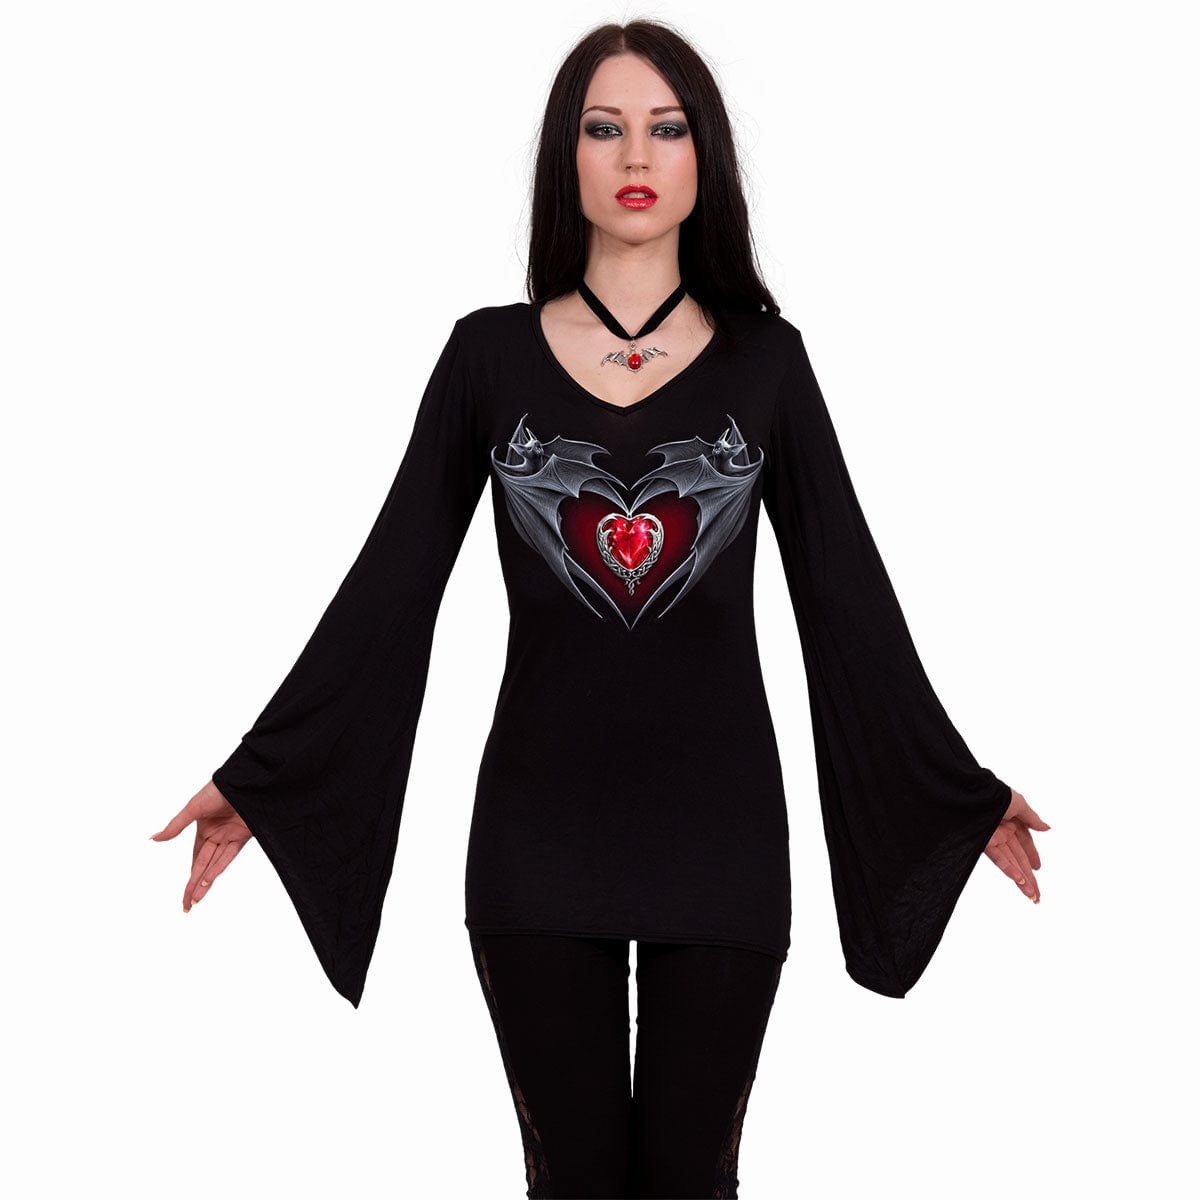 BAT'S HEART - V Neck Goth Sleeve Top Black - Spiral USA